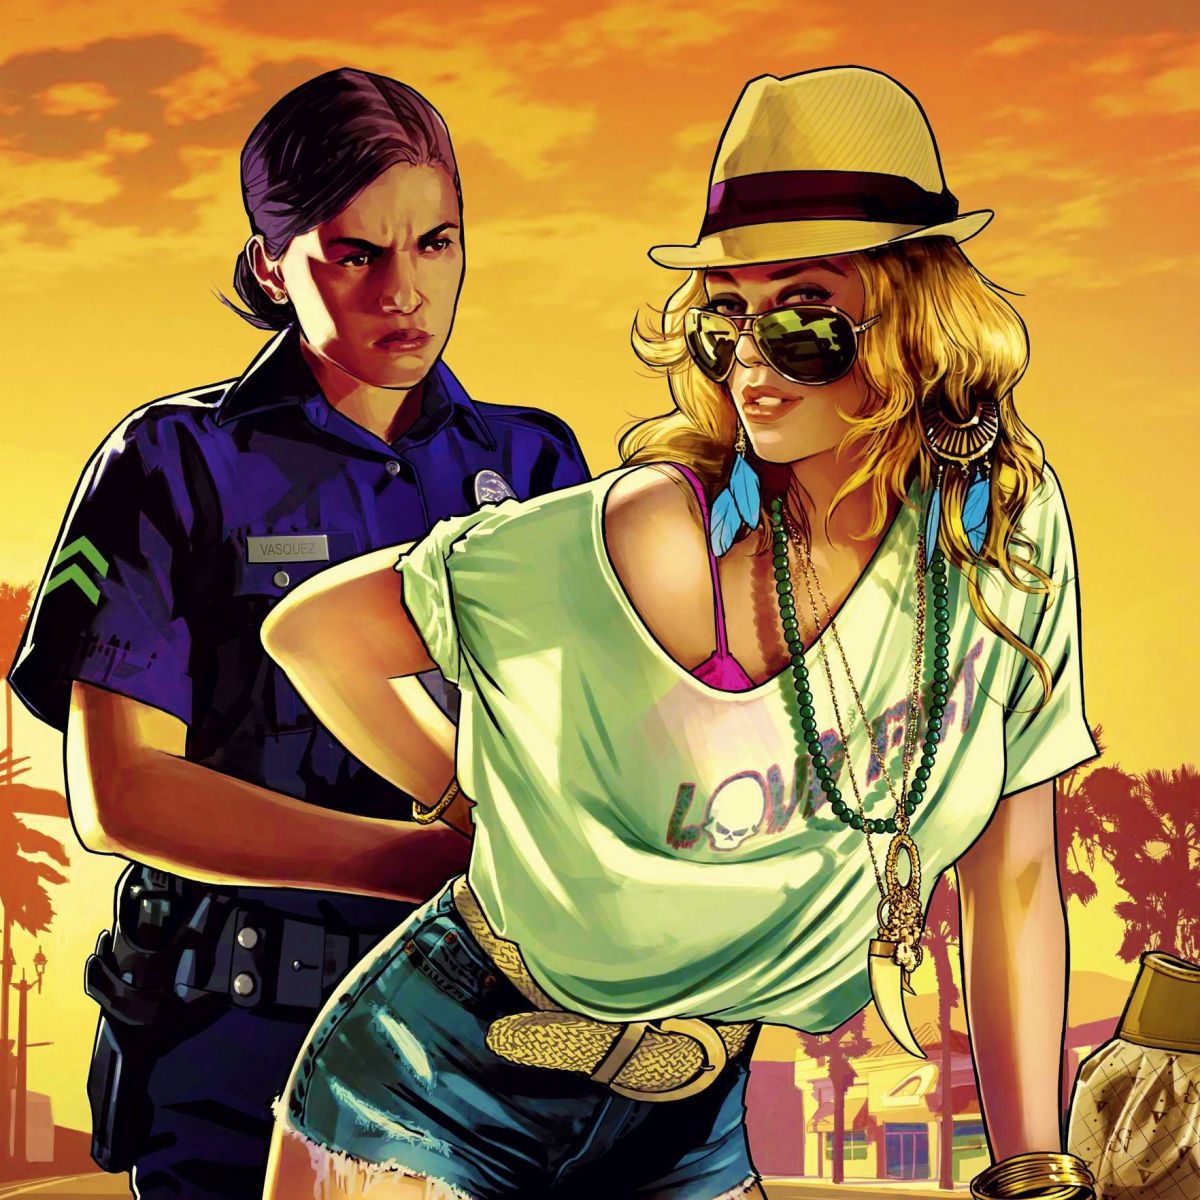 Grand Theft Auto V sets sales record of $800 million